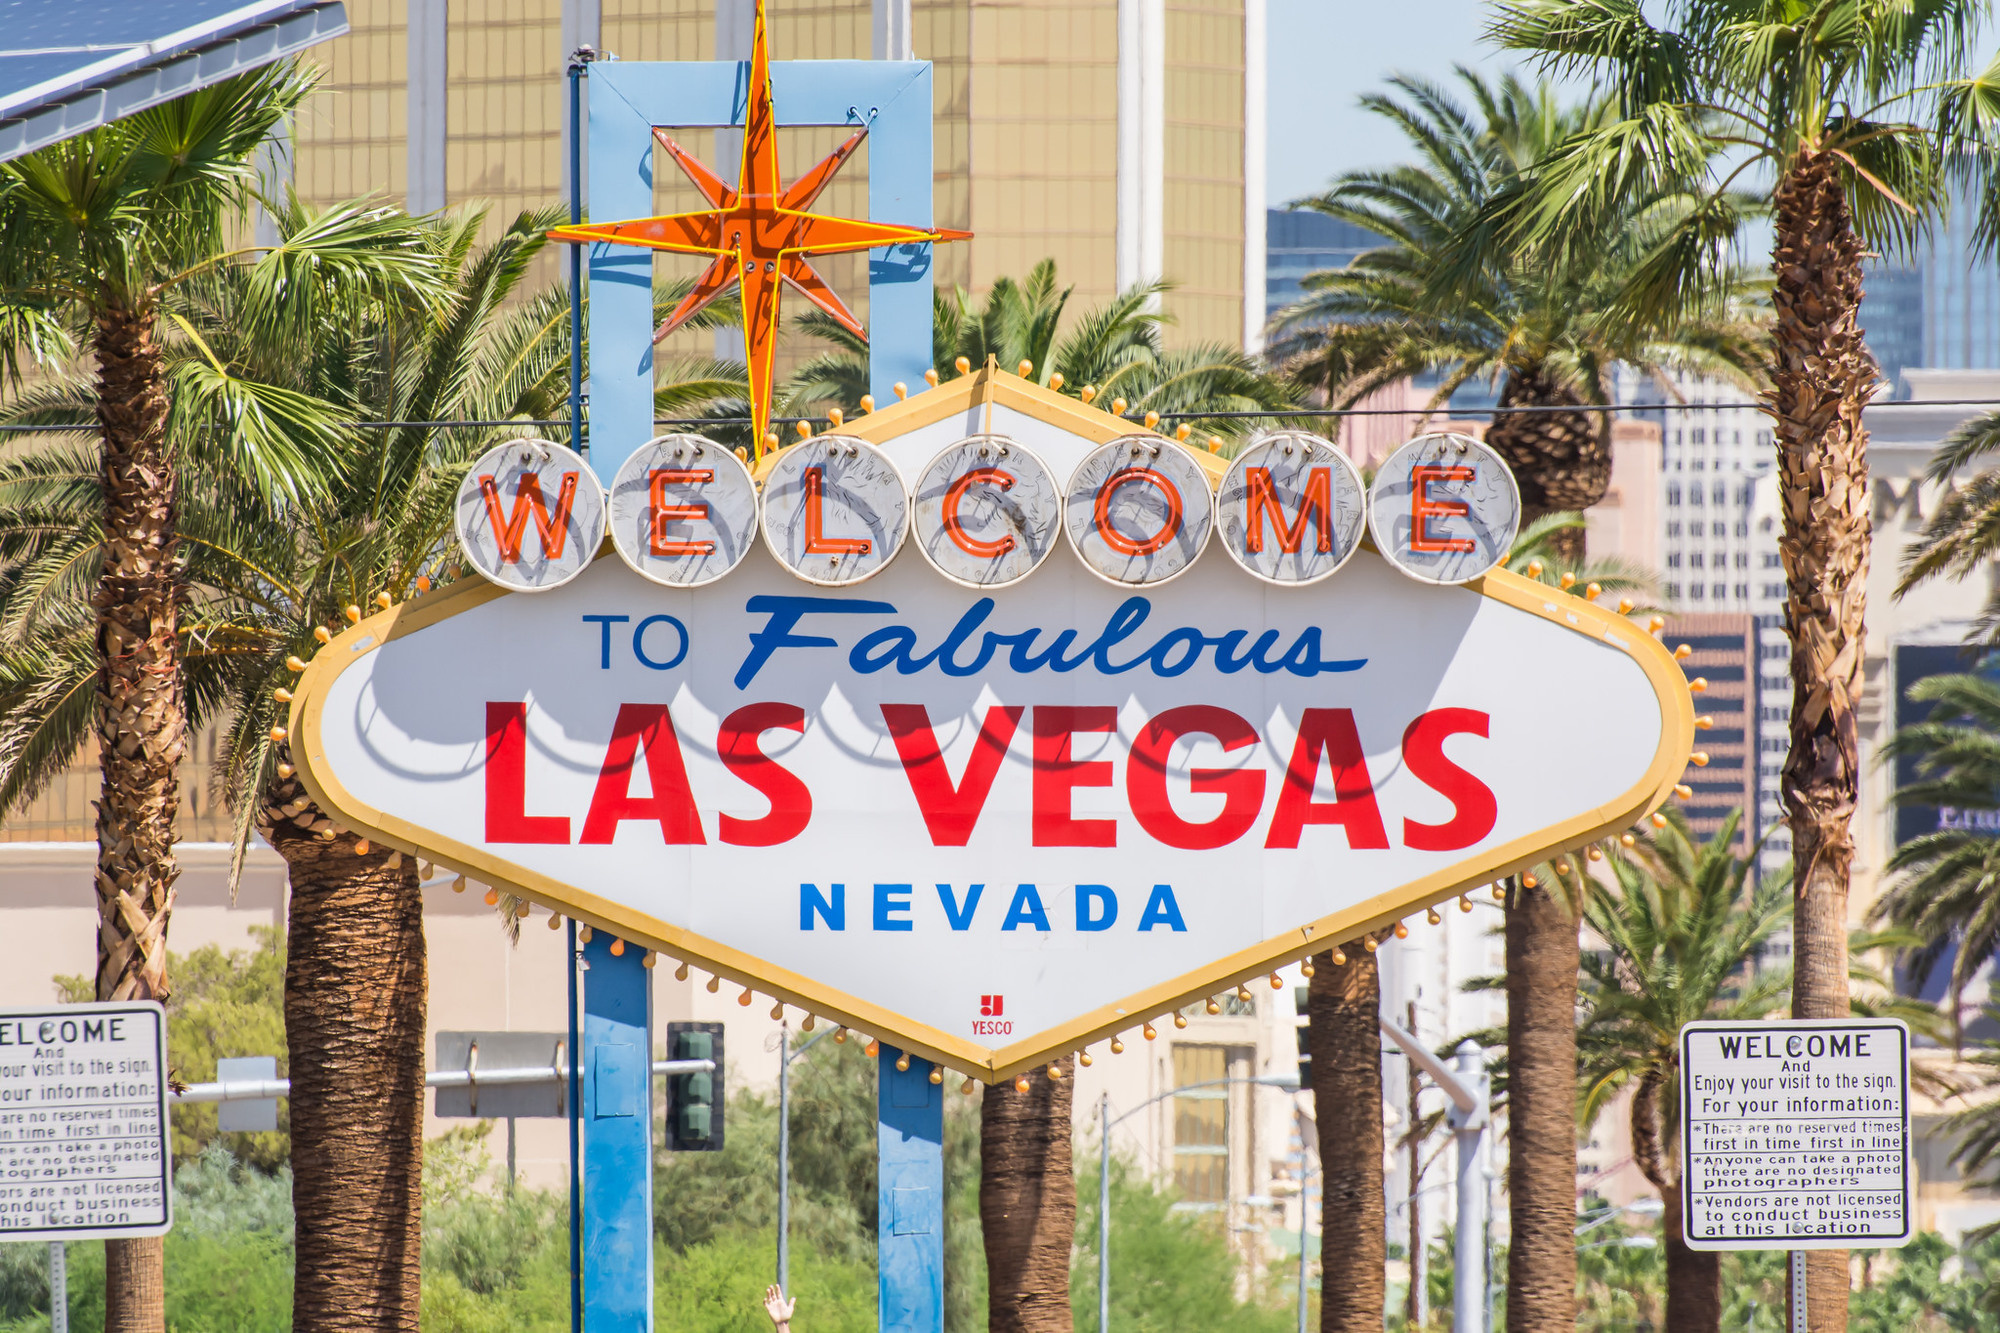 welcome to las vegas sign - To Fabulous Las Vegas Nevada Eleome Weleome w year with